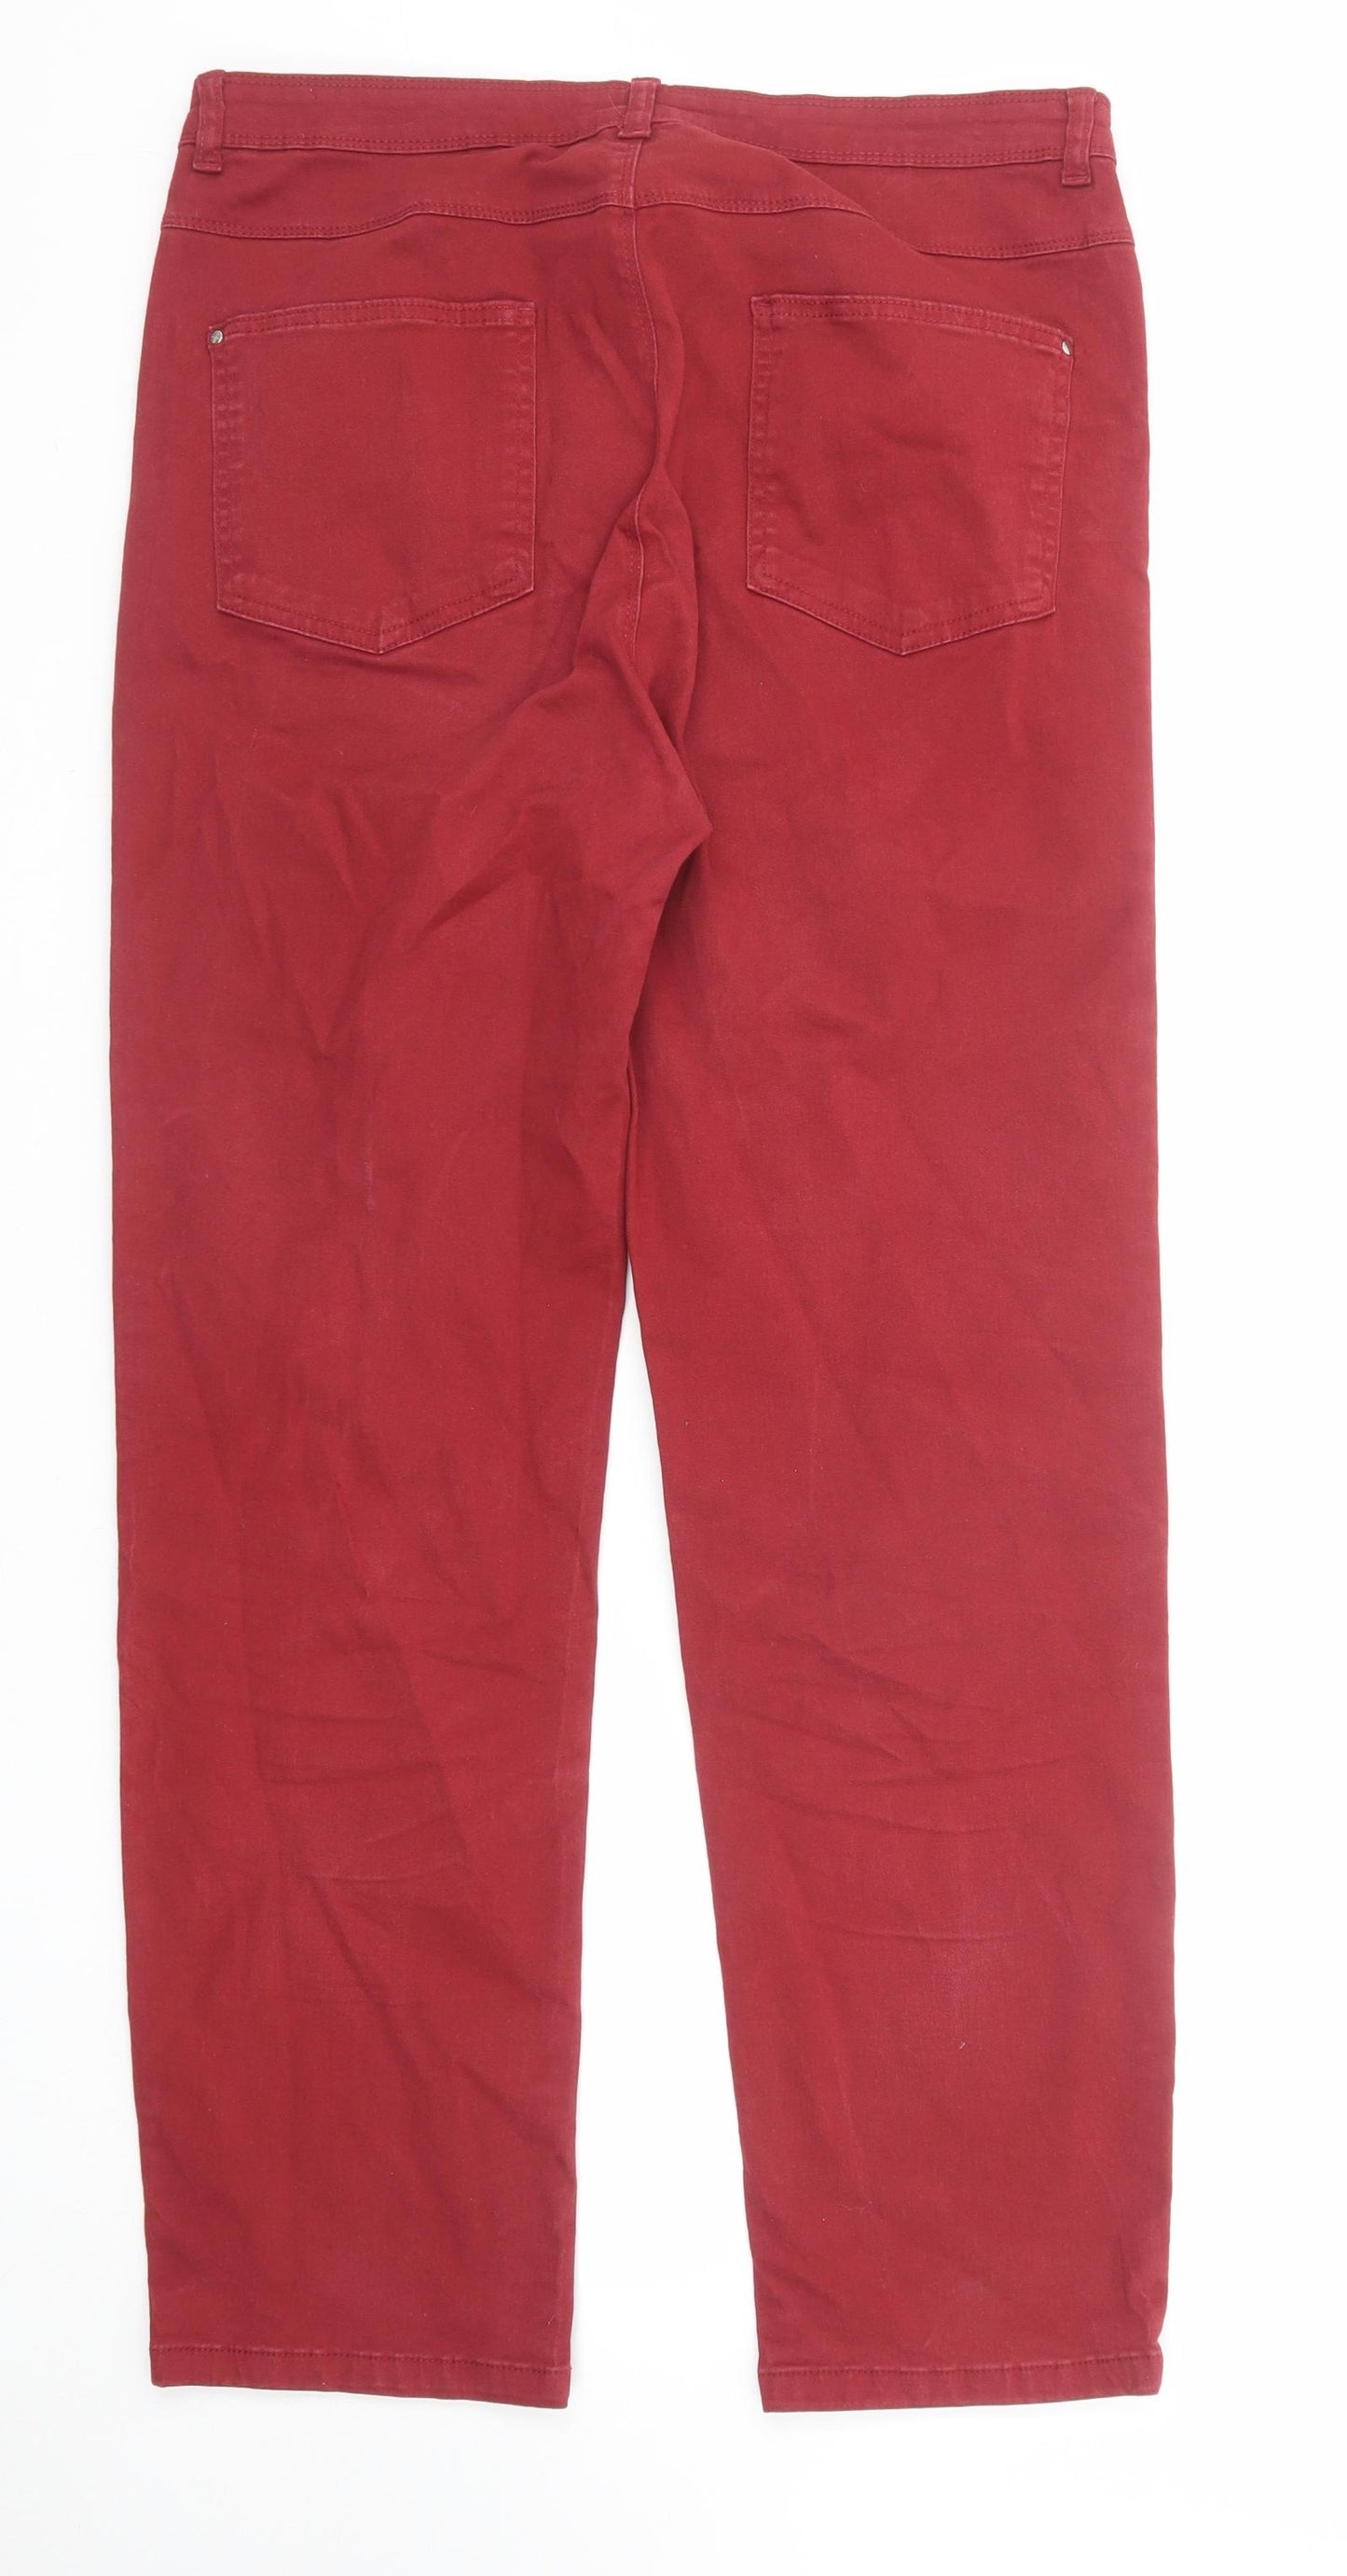 Alexara Womens Red Cotton Straight Jeans Size 16 Regular Zip